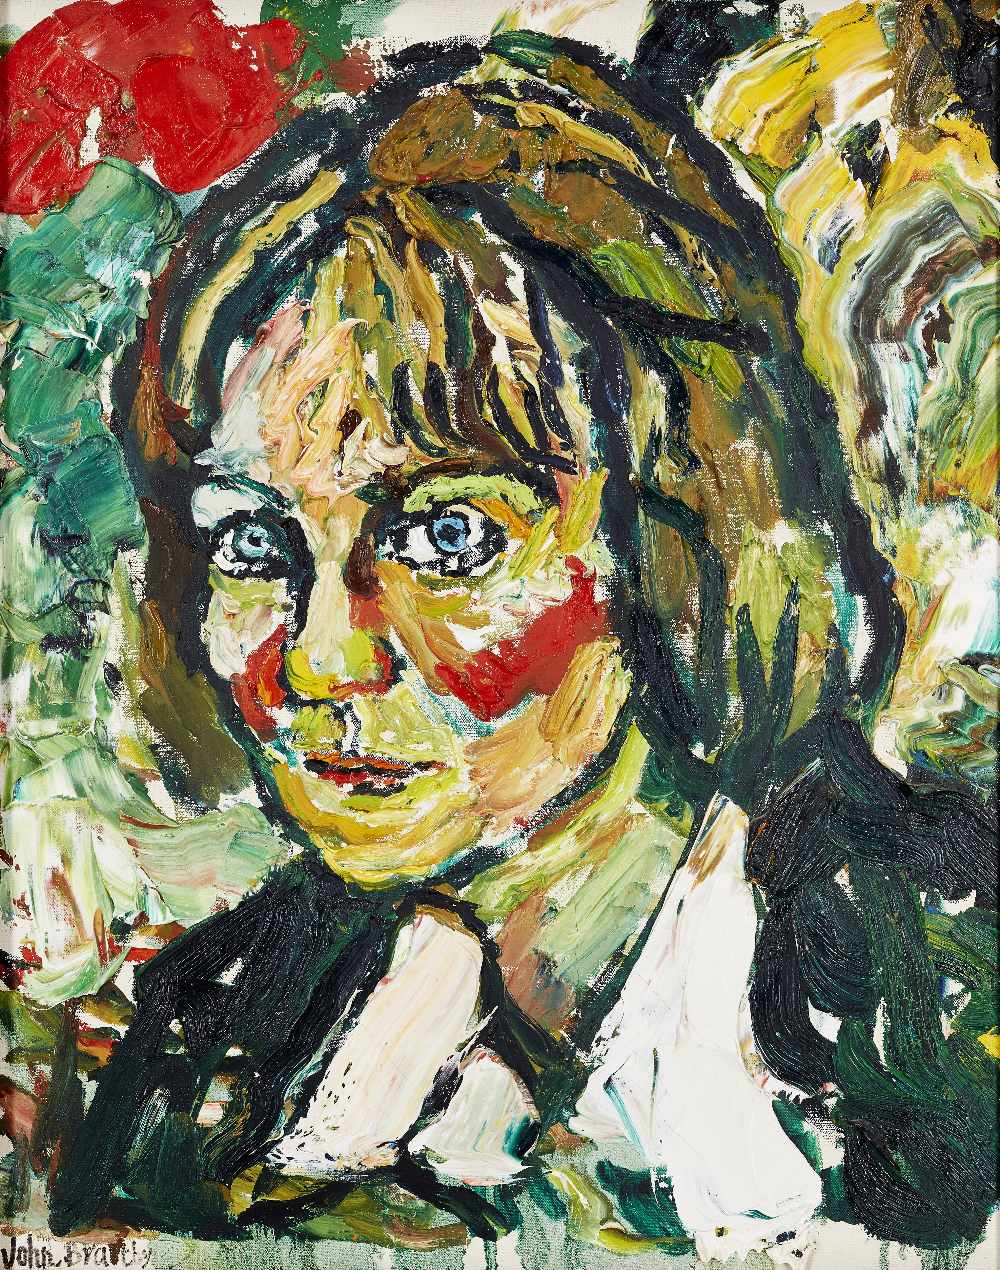 John Randall Bratby RA, British 1928-1992 - Iris Murdoch; oil on canvas, signed lower left 'John